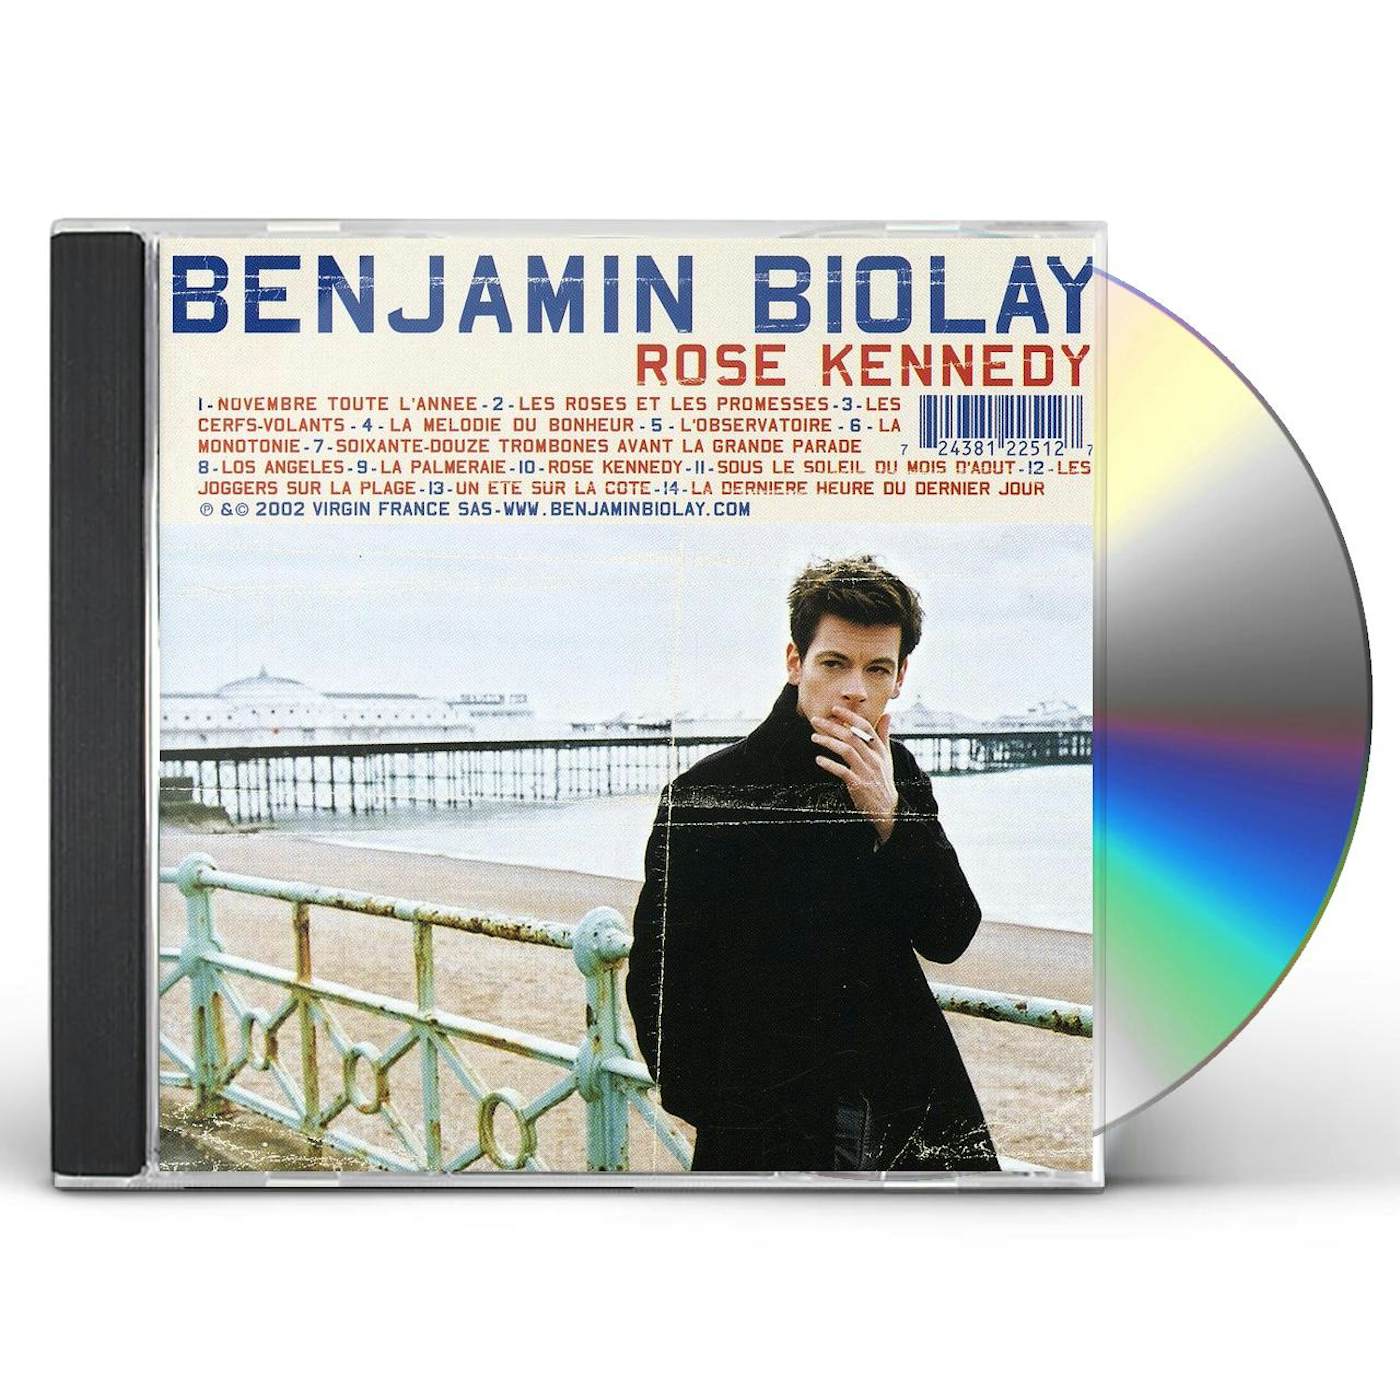 Benjamin Biolay ROSE KENNEDY CD